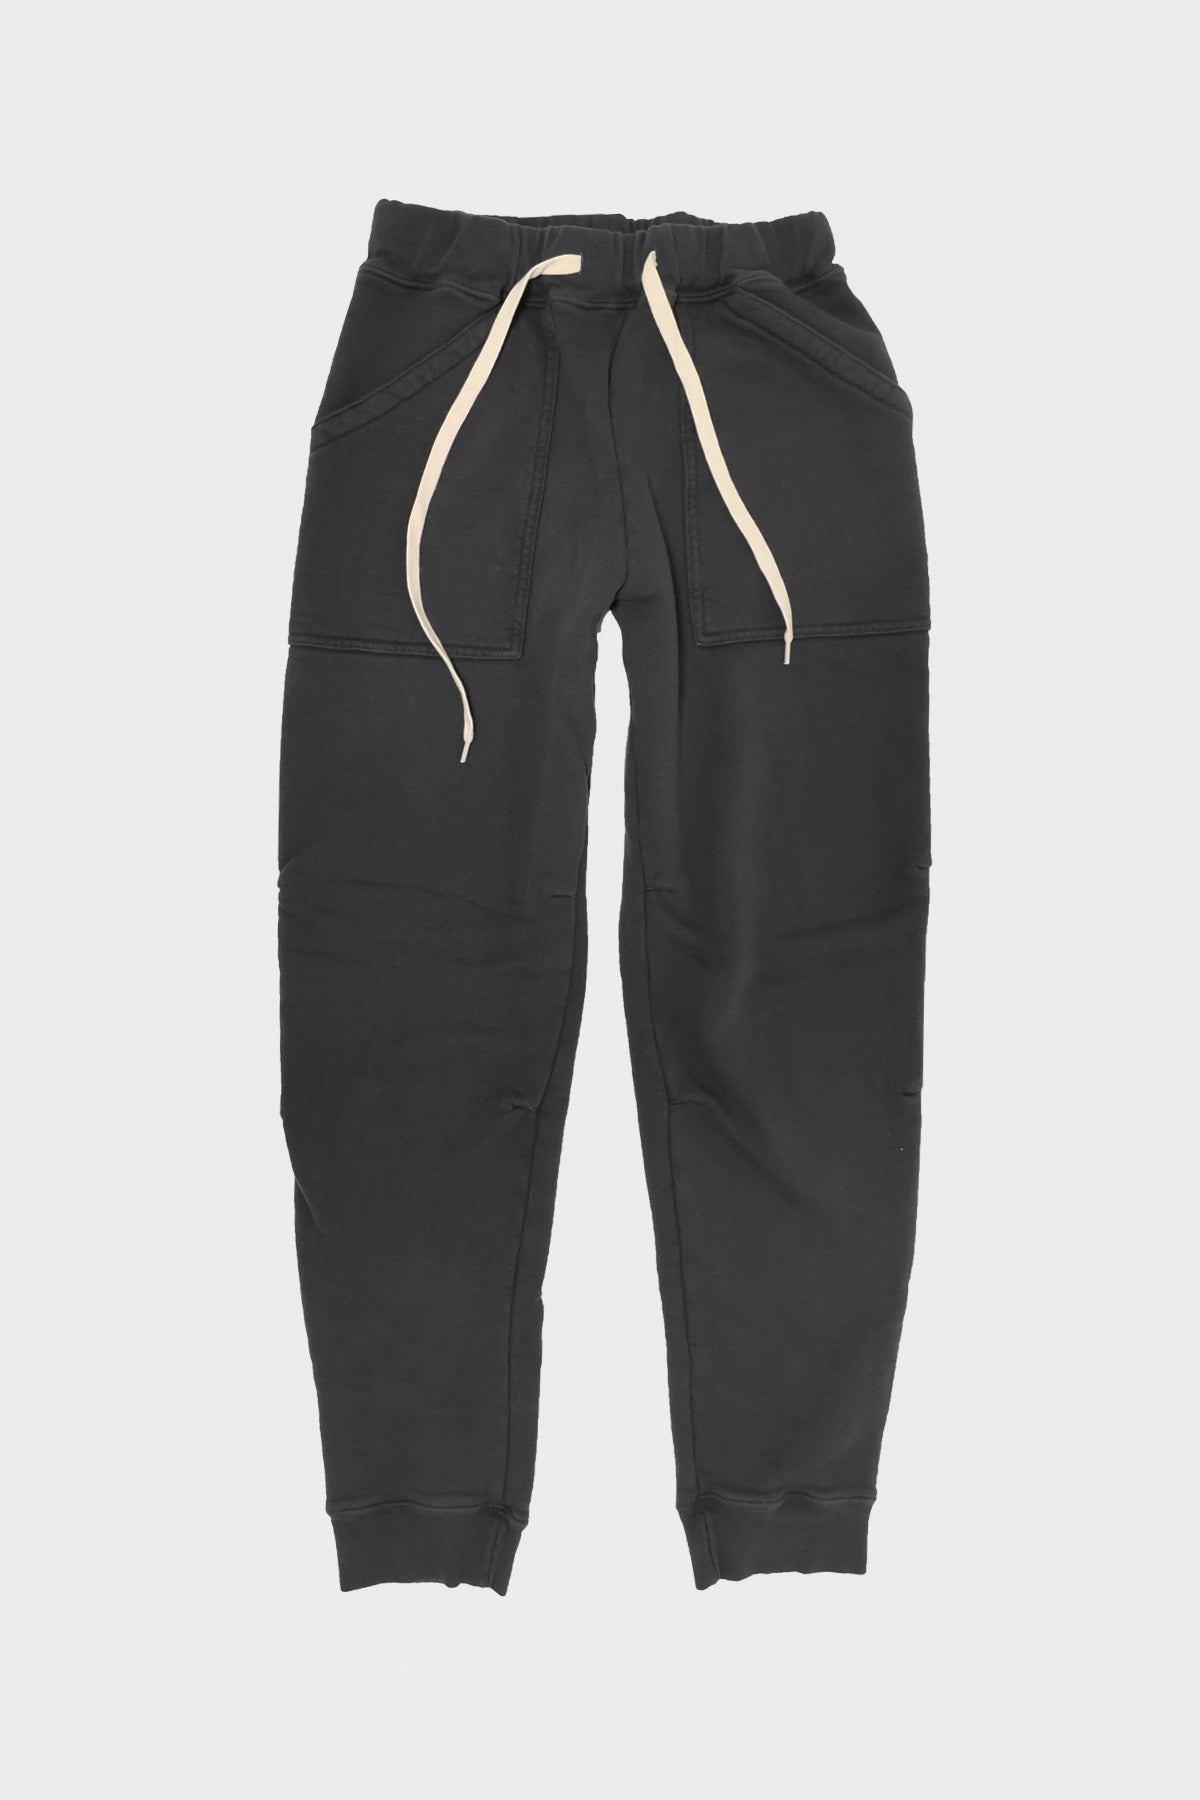 Velva Sheen Pigment Army Gym Sweatpants, Black